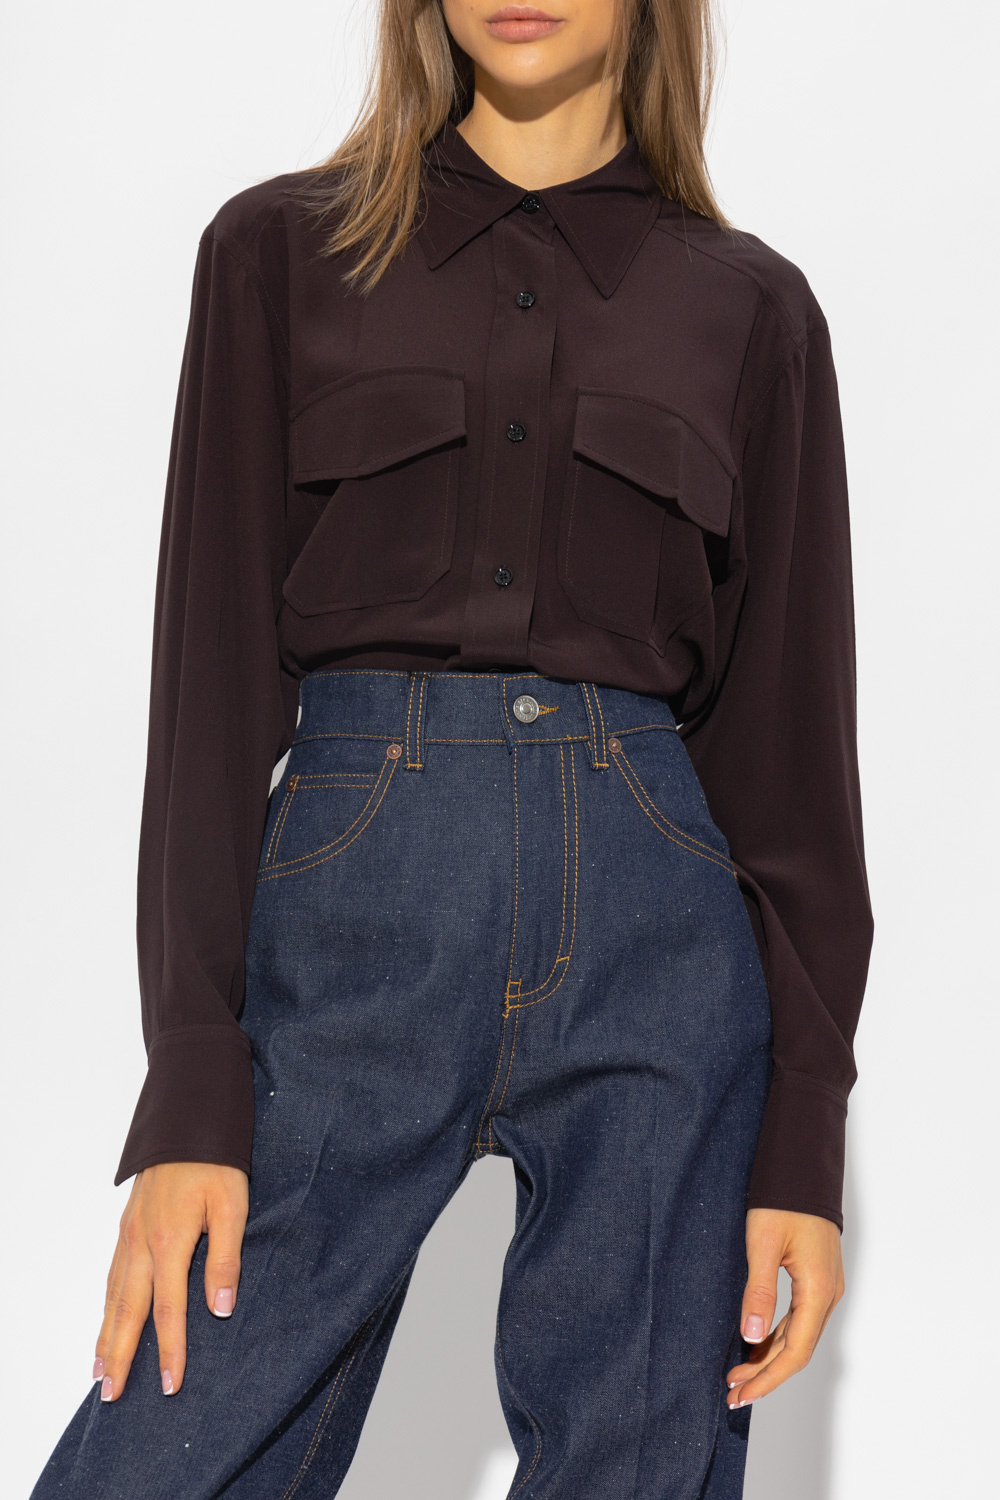 Victoria Beckham Silk shirt Revival with pockets